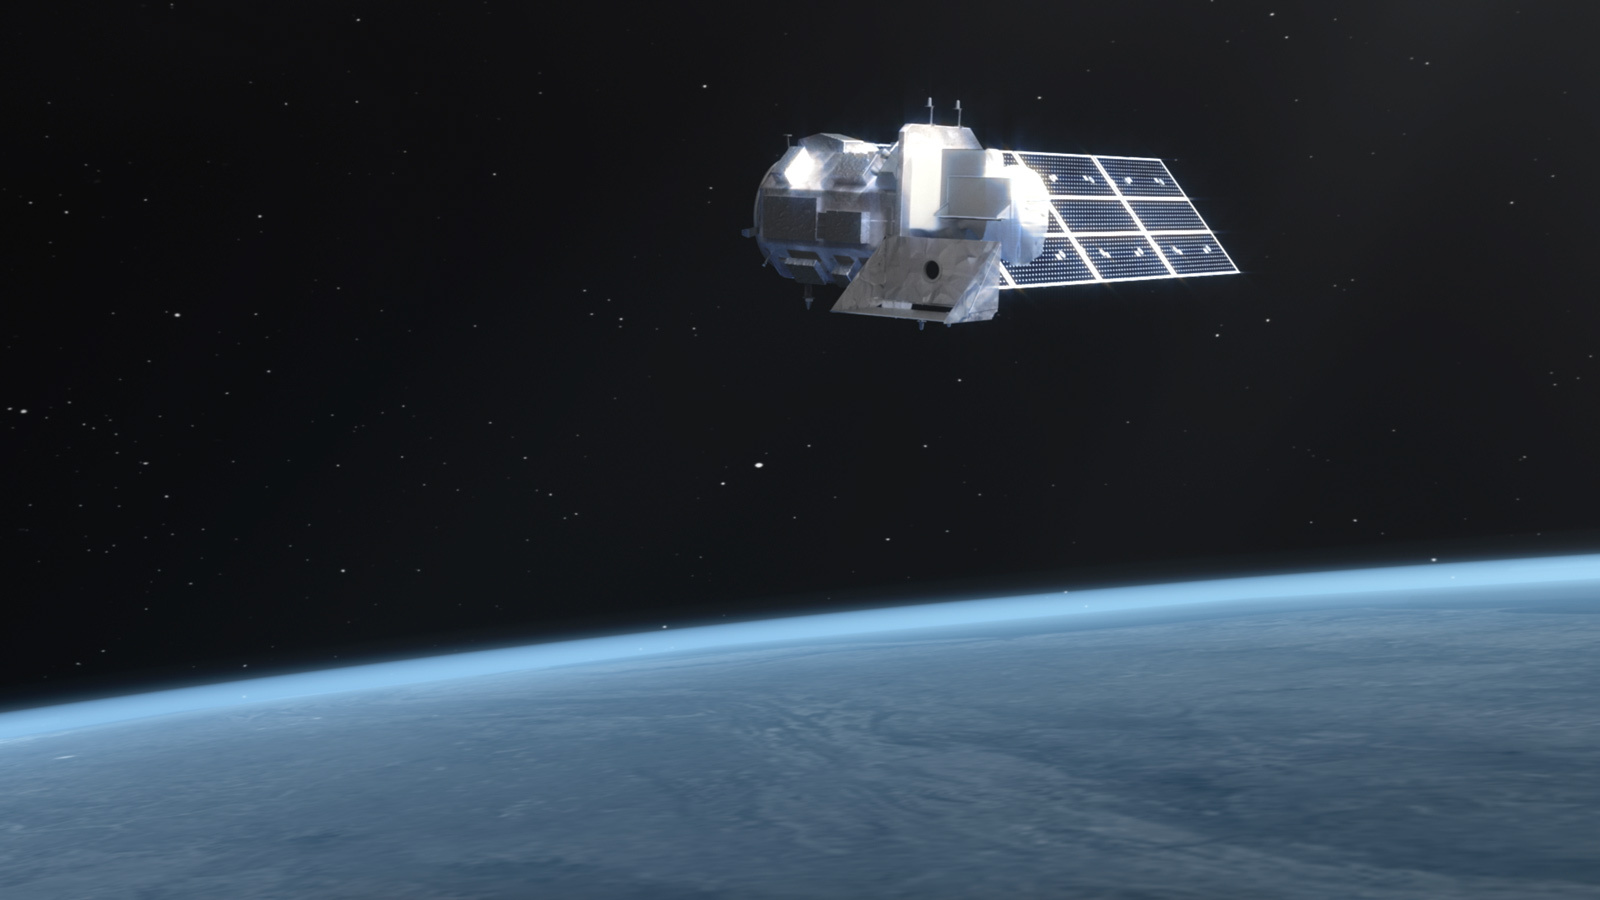 illustration of the LANDSAT 9 spacecraft in Earth's orbit